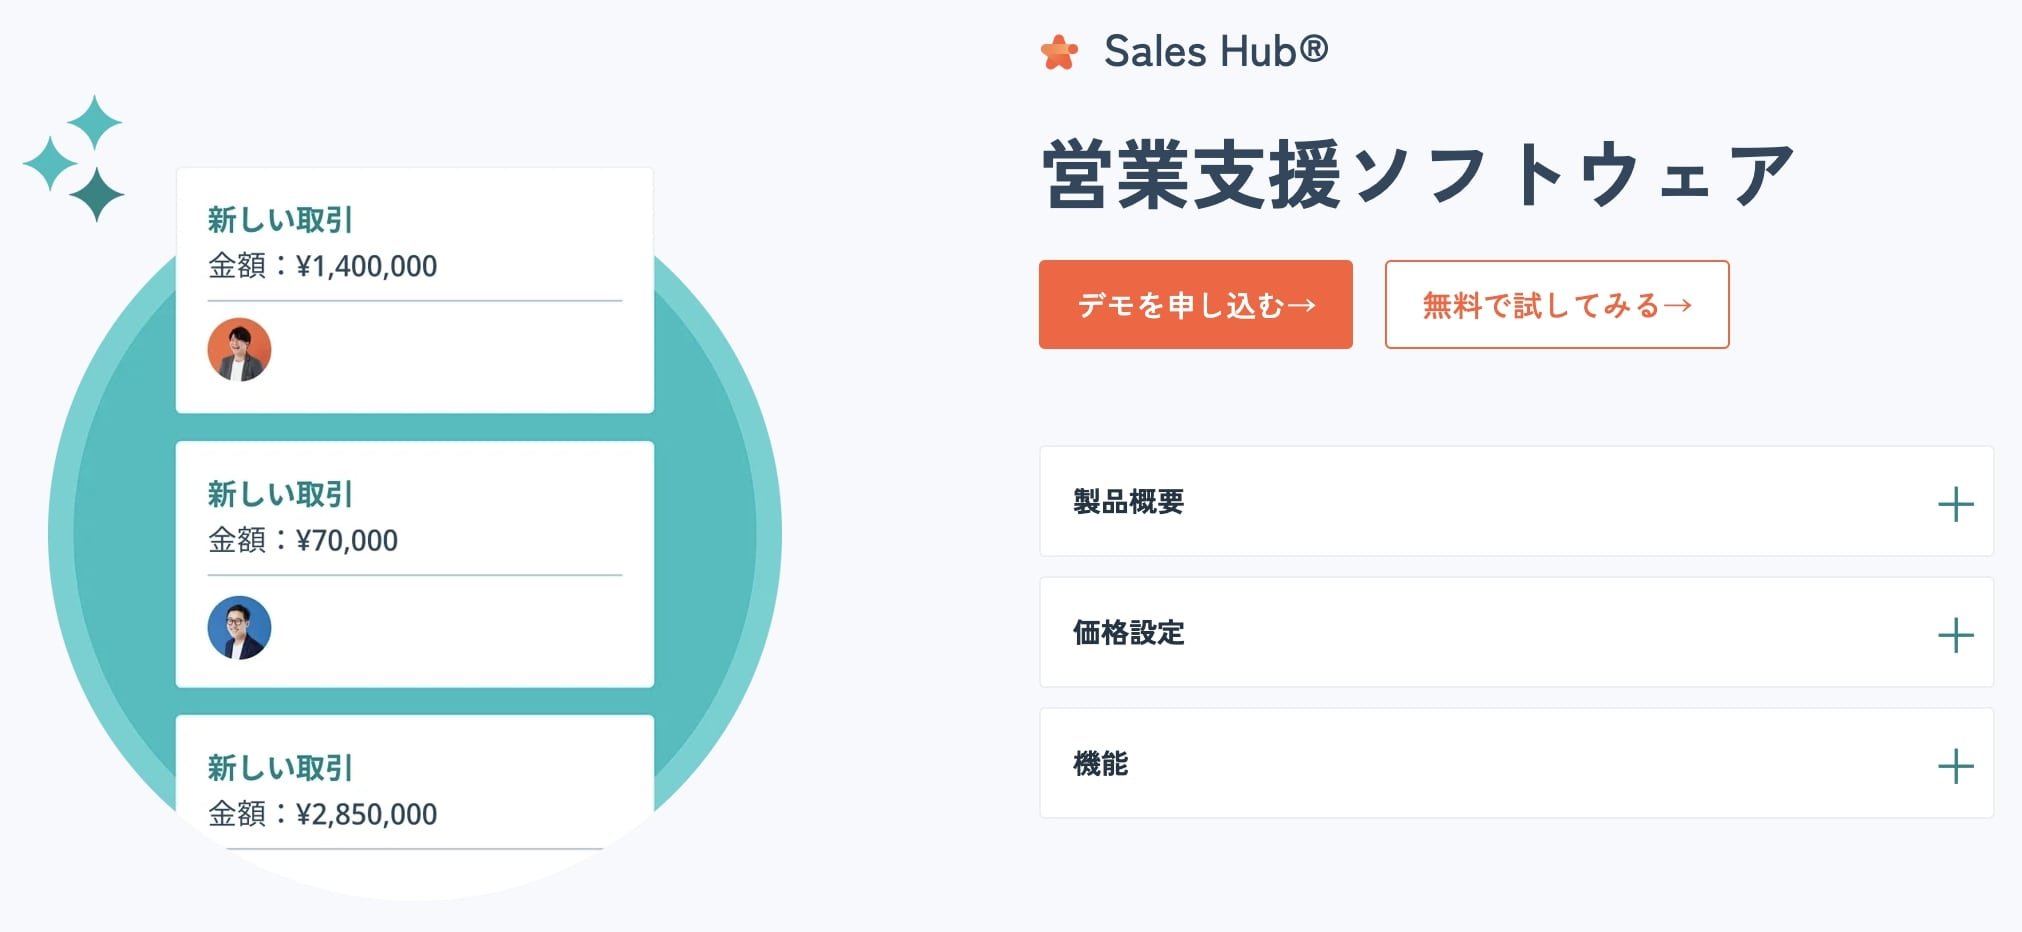 Sales Hub公式HP